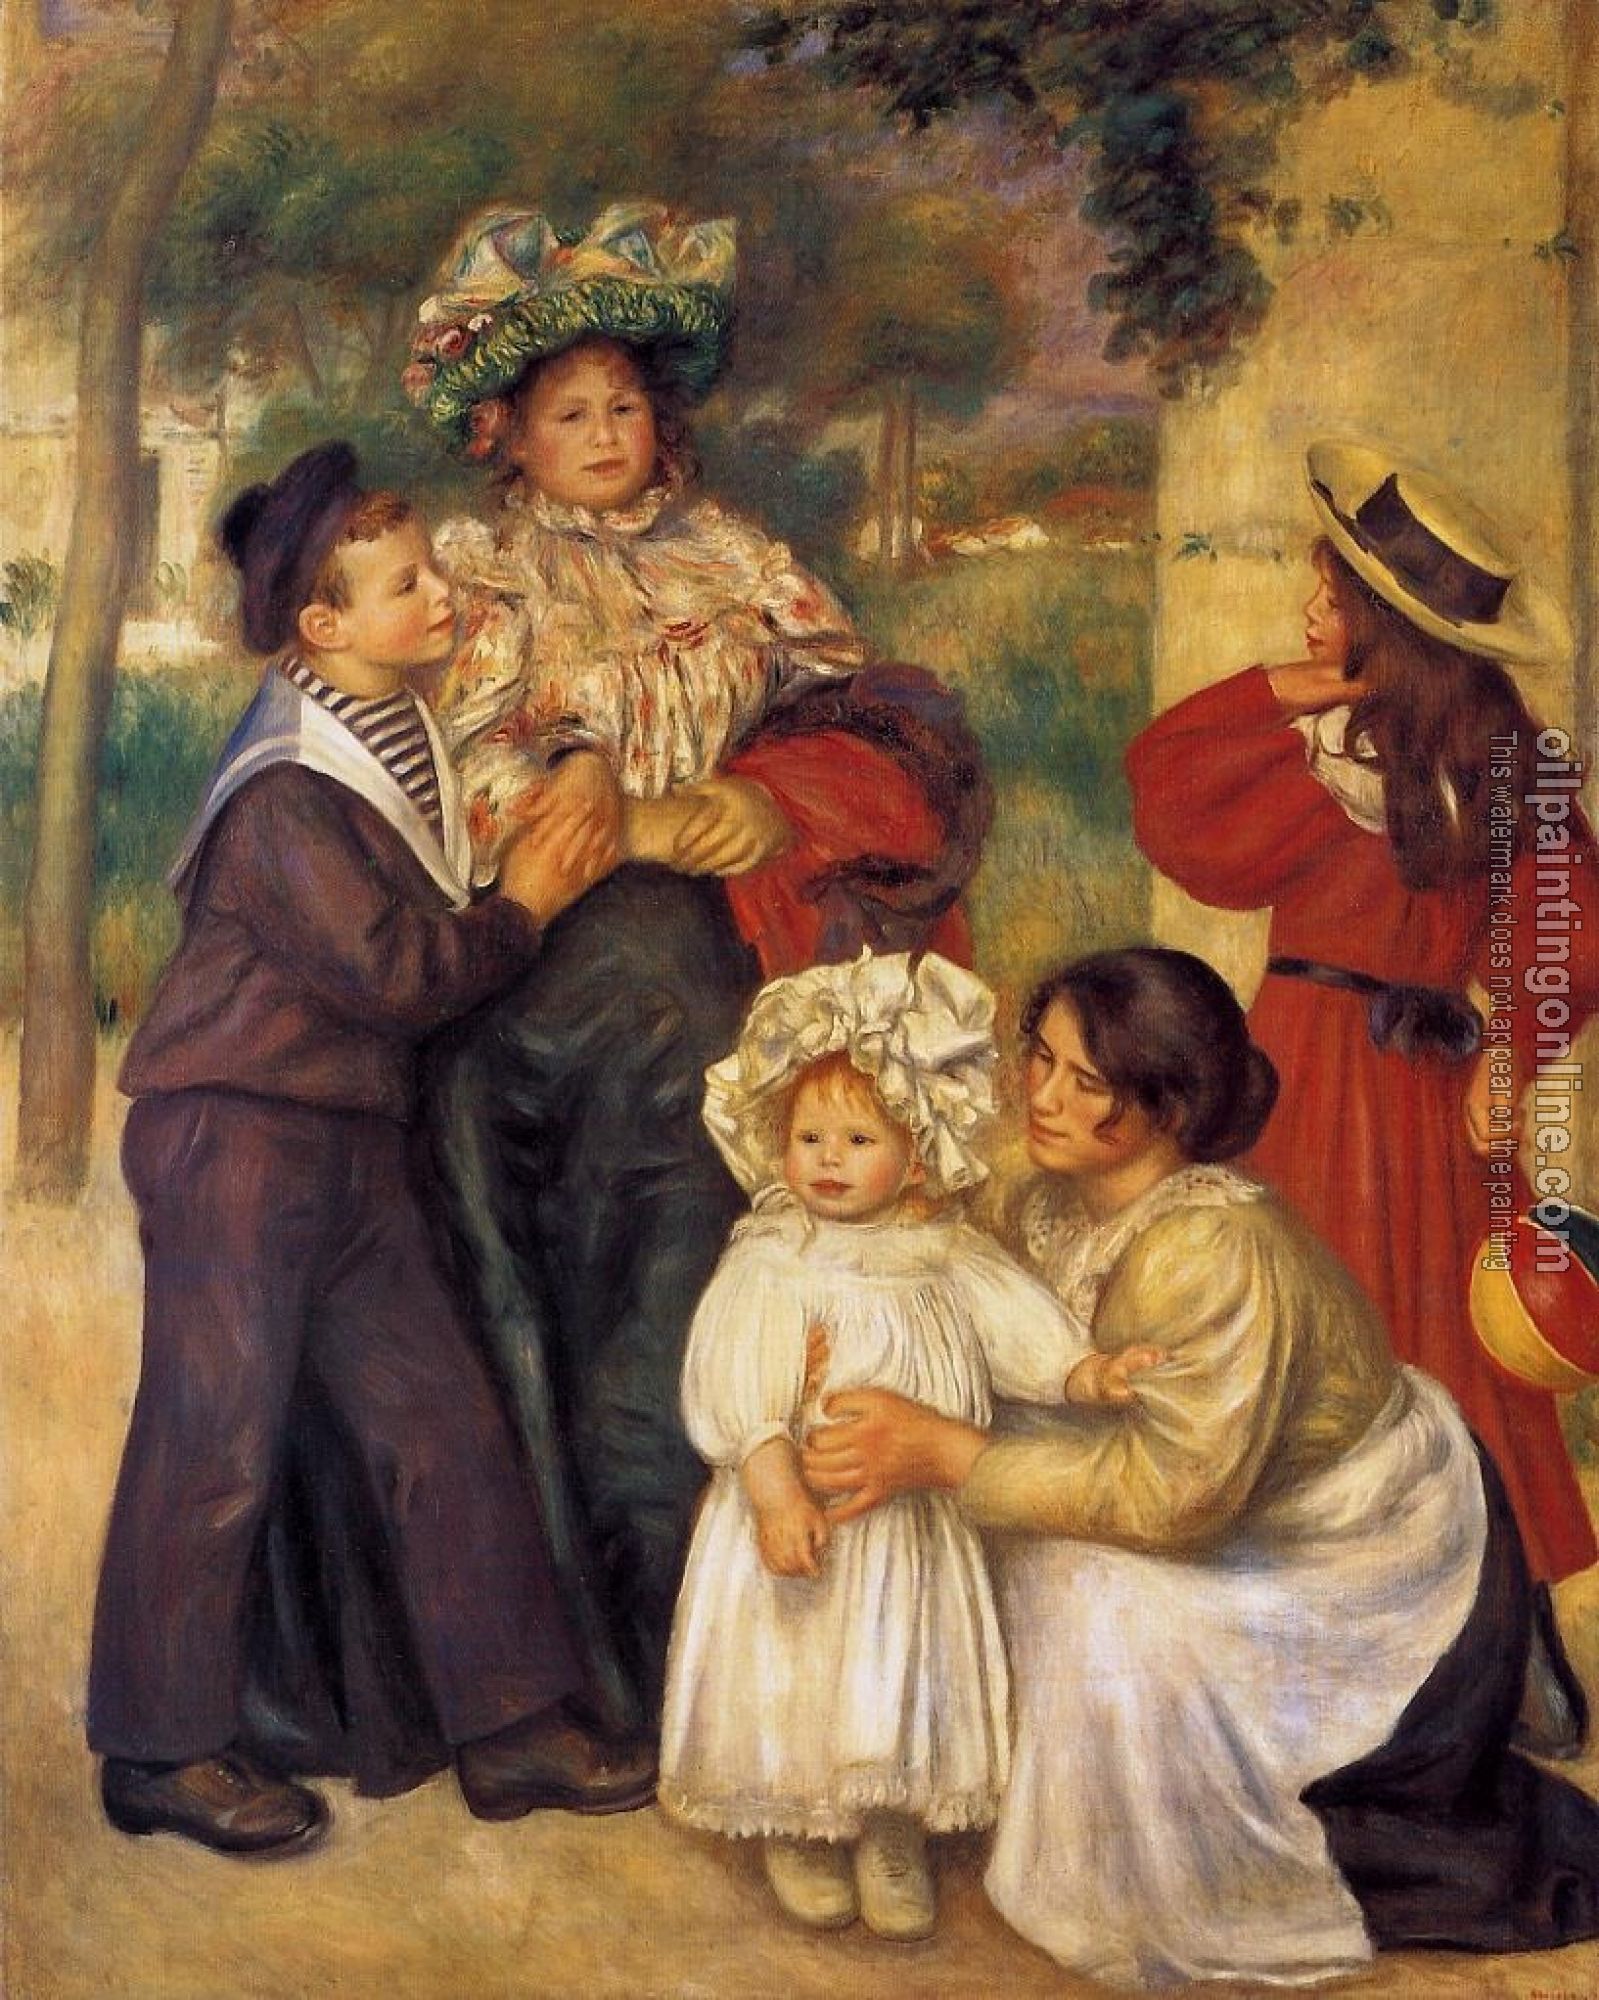 Renoir, Pierre Auguste - The Artist's Family